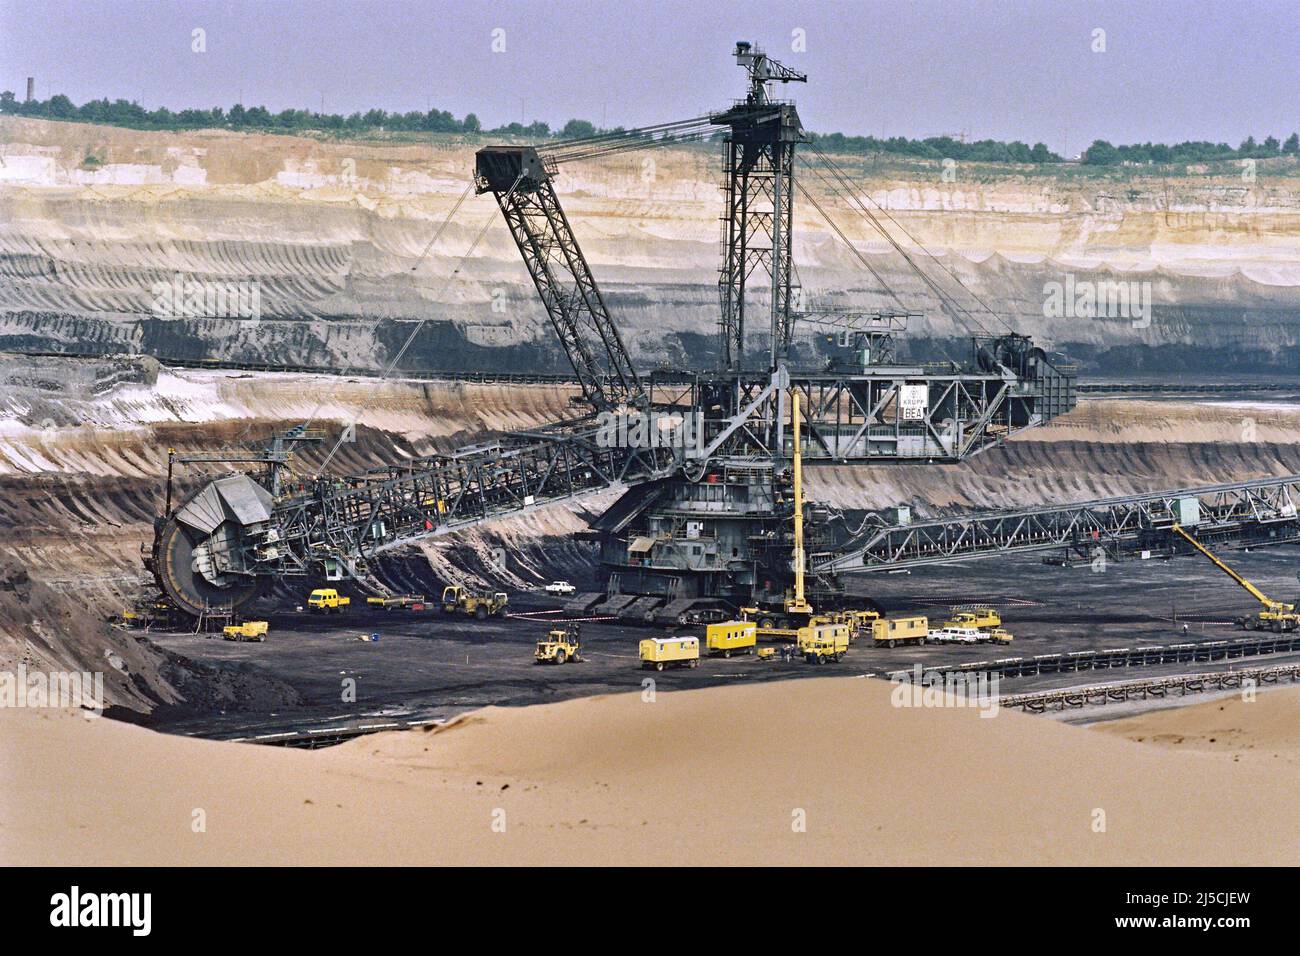 Garzweiler, May 23, 1995 - Rheinbraun lignite excavator in the Garzweiler open pit mine.The Garzweiler open pit mine is a lignite open pit mine operated by RWE Power, until 2003 by RWE Rheinbraun AG, in the Rhenish lignite mining region. [automated translation] Stock Photo